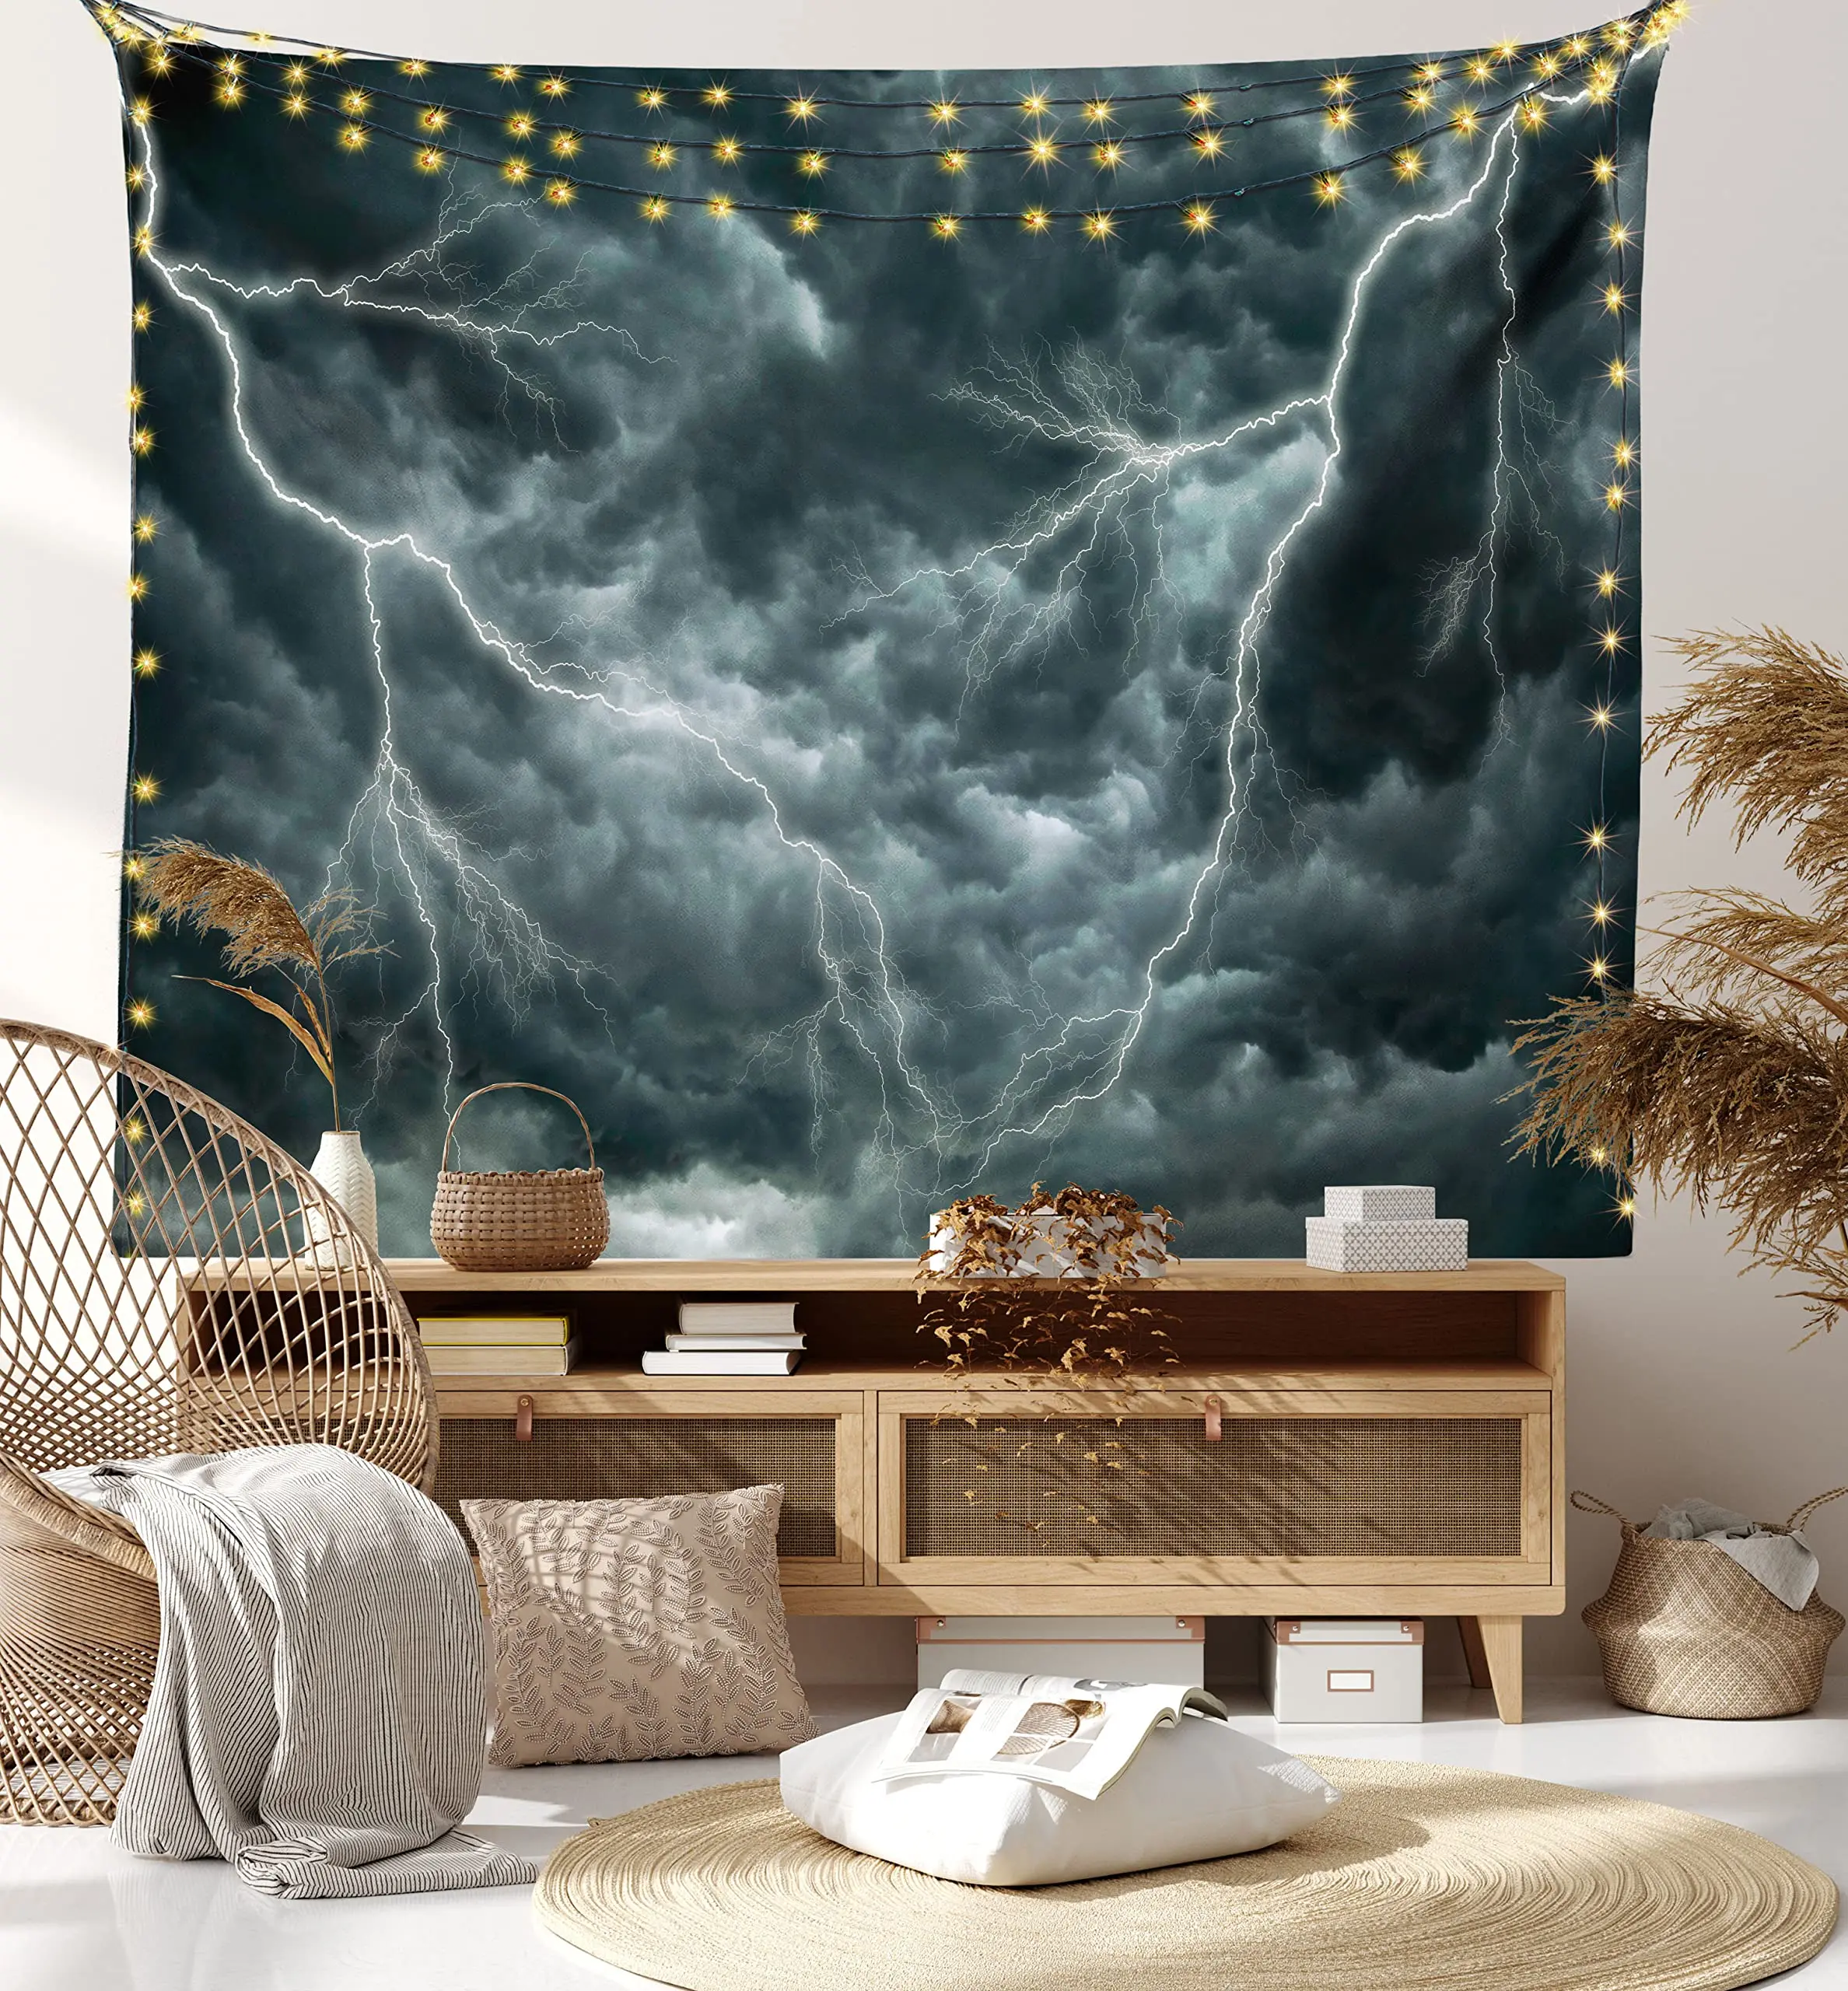 

Lightning Tapestry Natural Disaster Dark Clouds Thunder and Lightning Tapestry Wall Hanging Decor for Bedroom Living Room Dorm